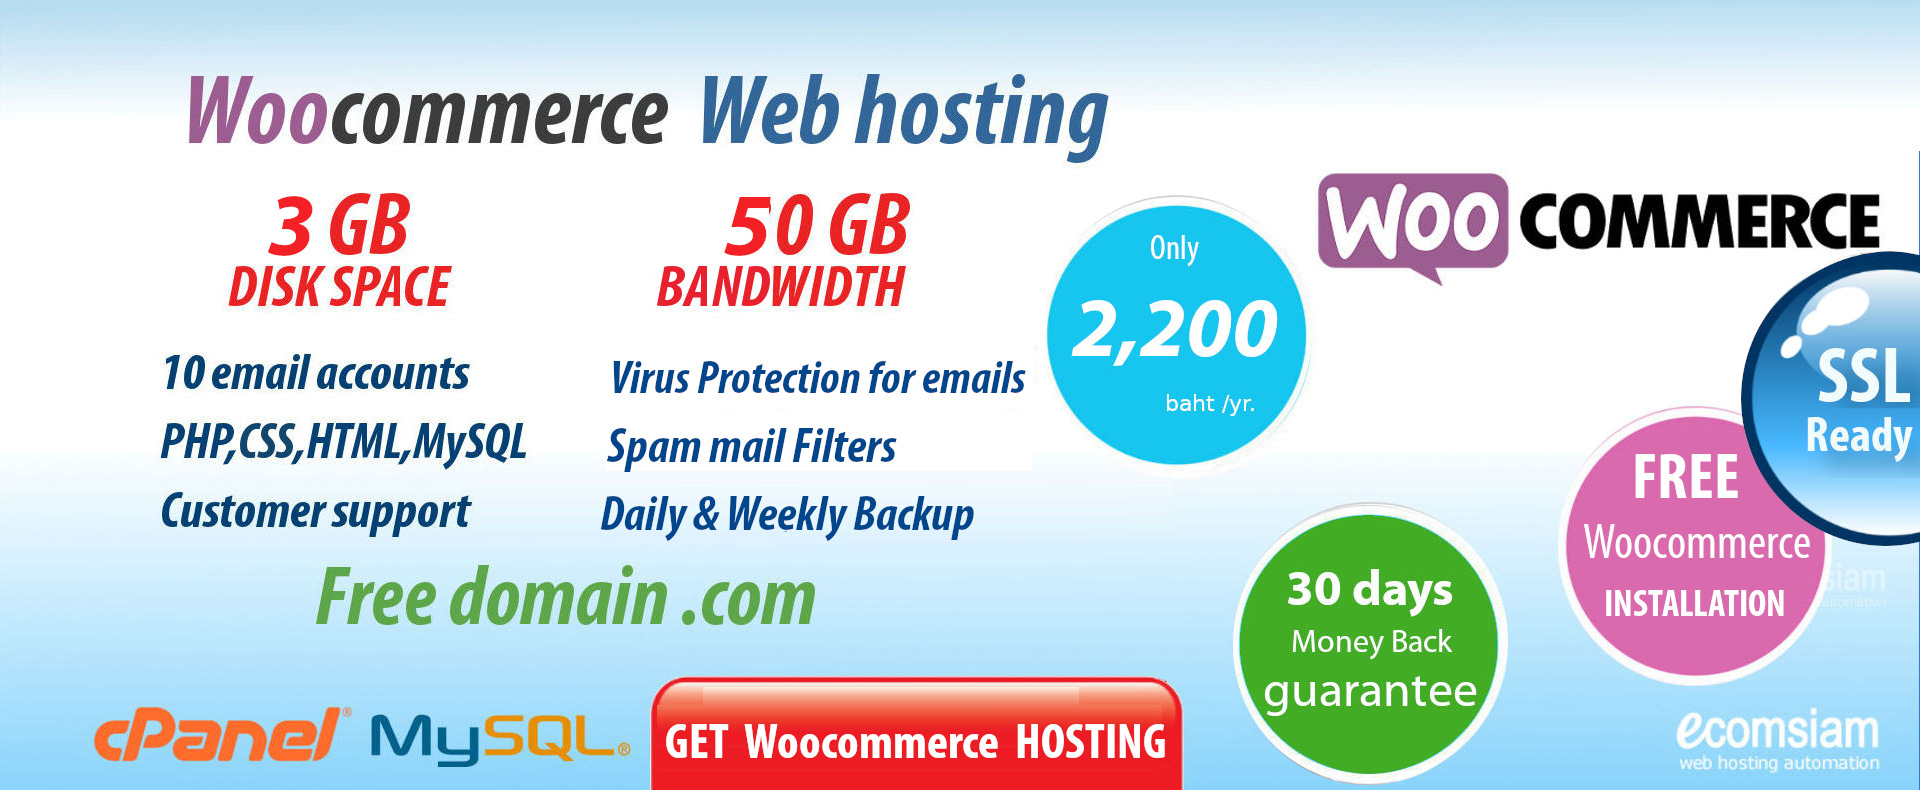 web hosting thai บริการเว็บโฮสติ้ง ฟรีโดเมน ฟรี SSL -แนะนำ woocommerce web hosting thailand เว็บโฮสติ้งไทย ฟรี โดเมน ฟรี SSL - web hosting thailand free domain - woocommerce web hosting-banner